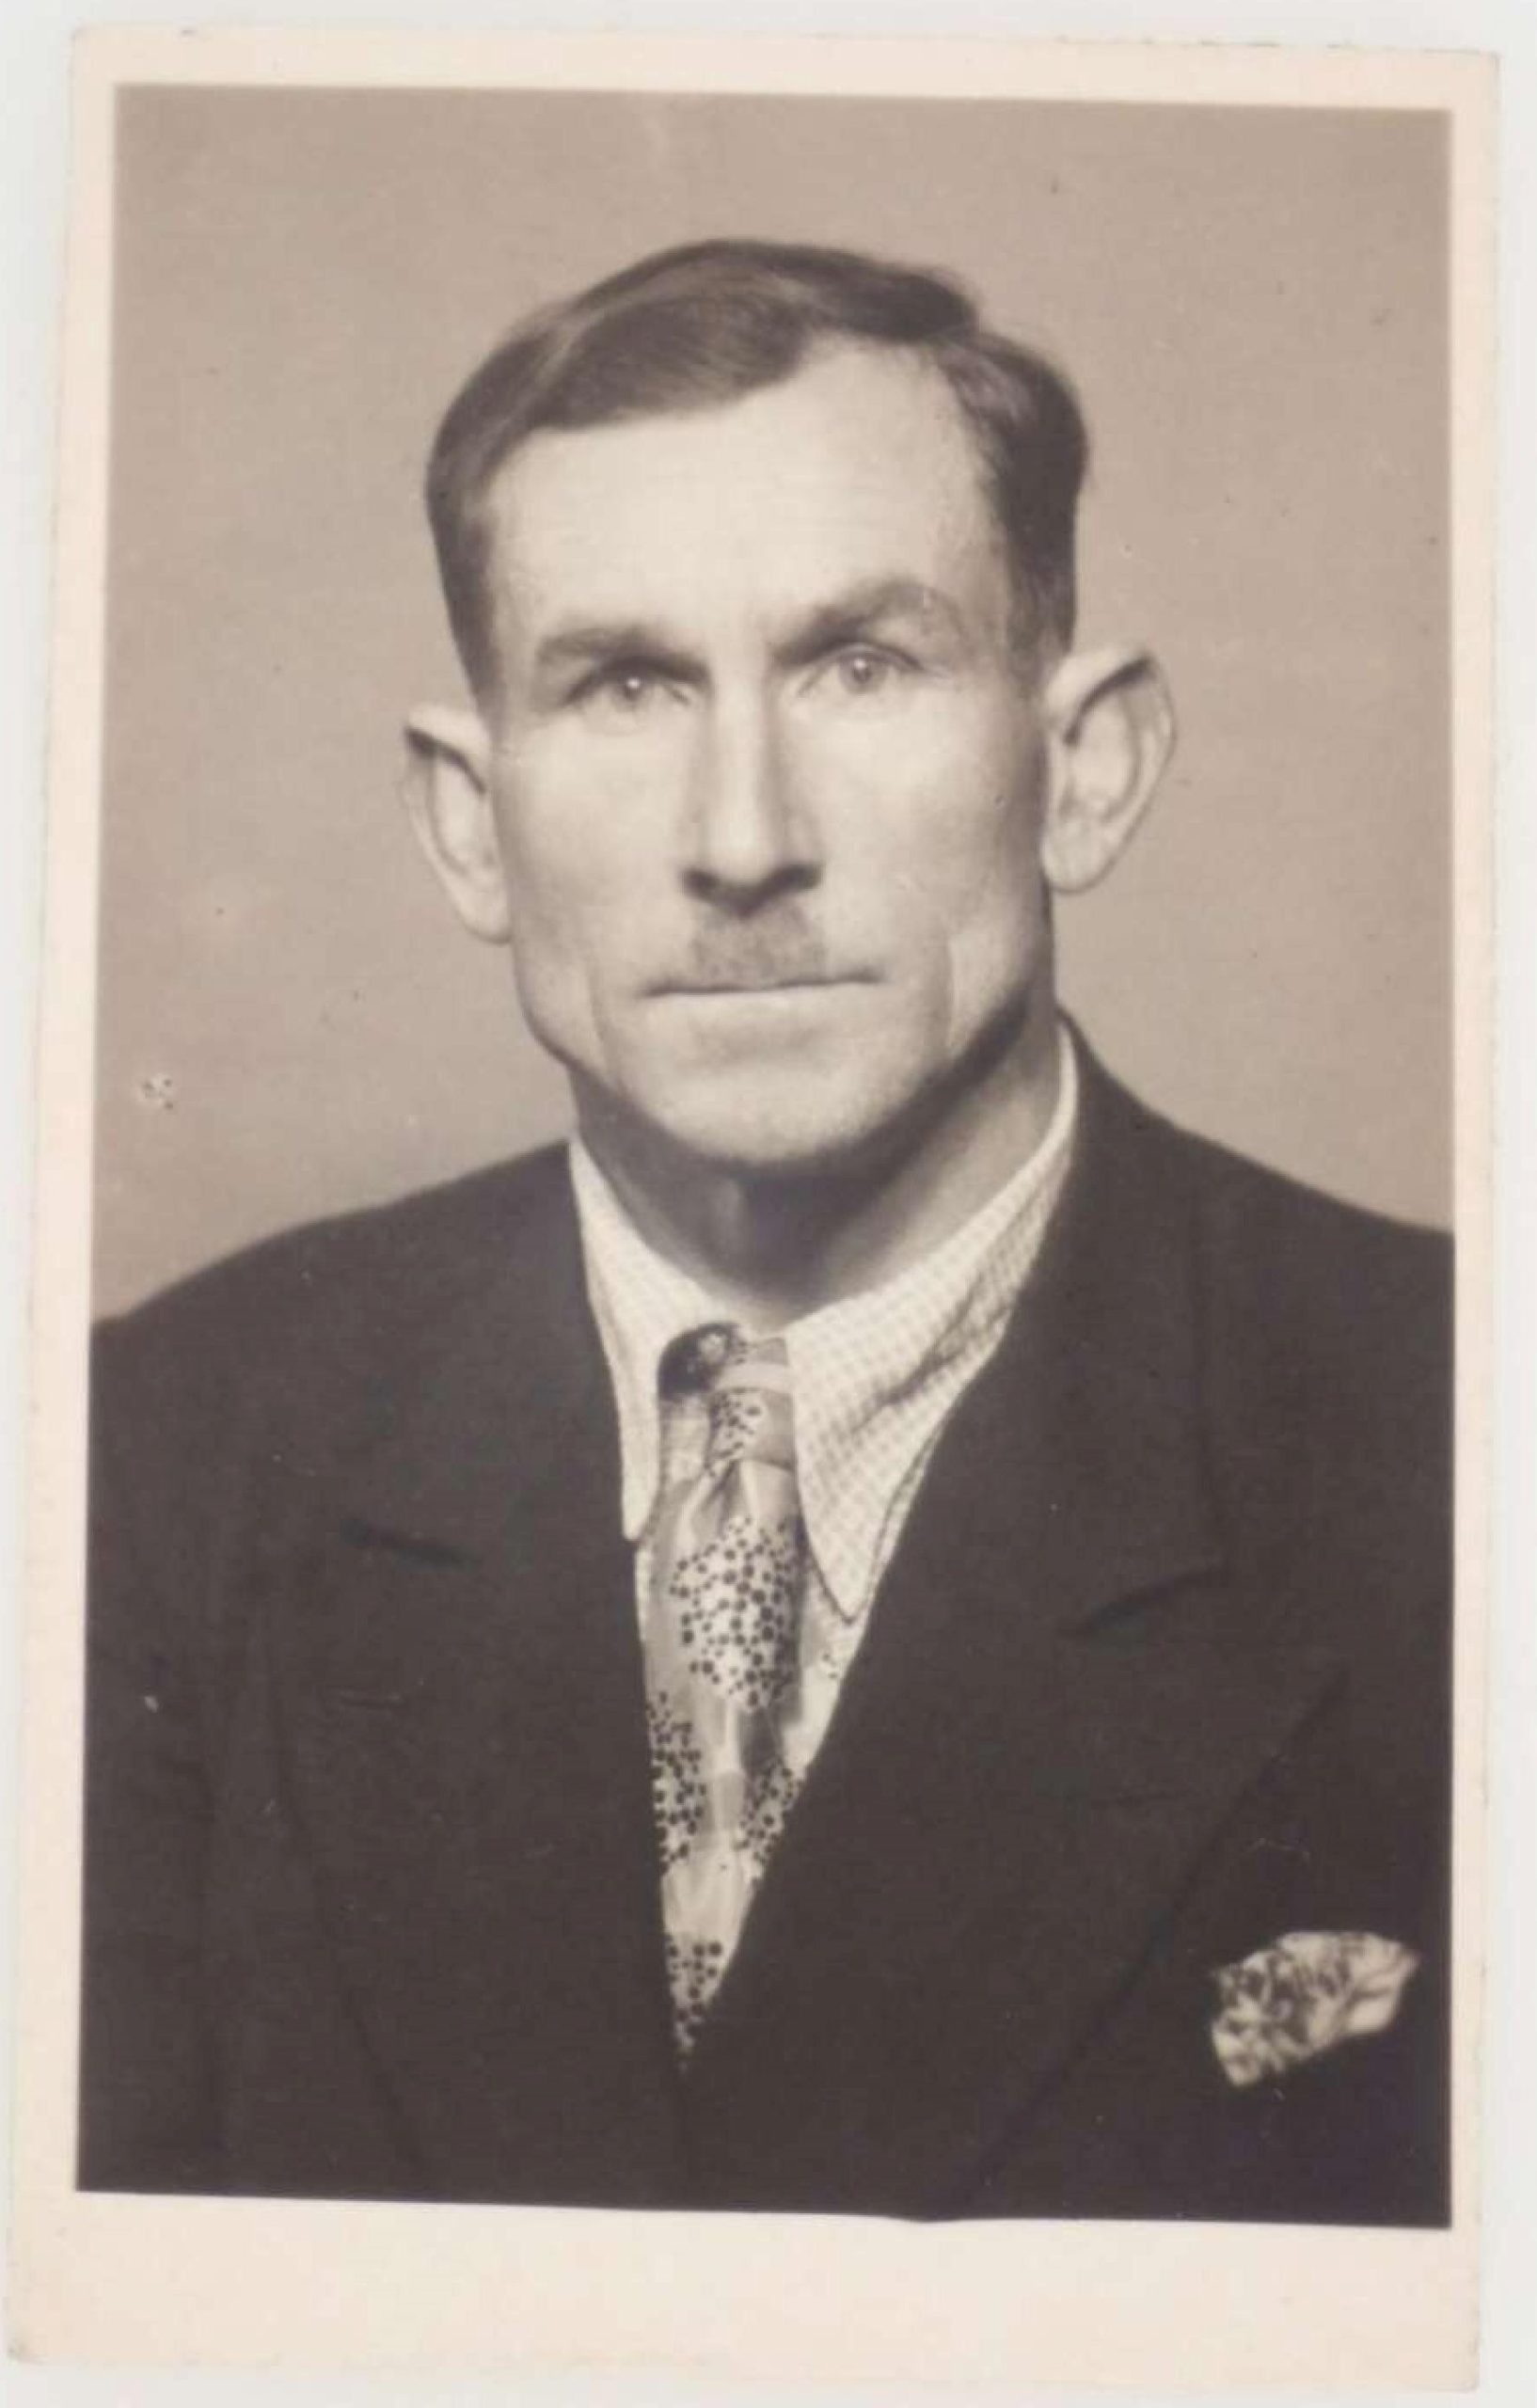 Portrait photograph of man with mustache wearing suit